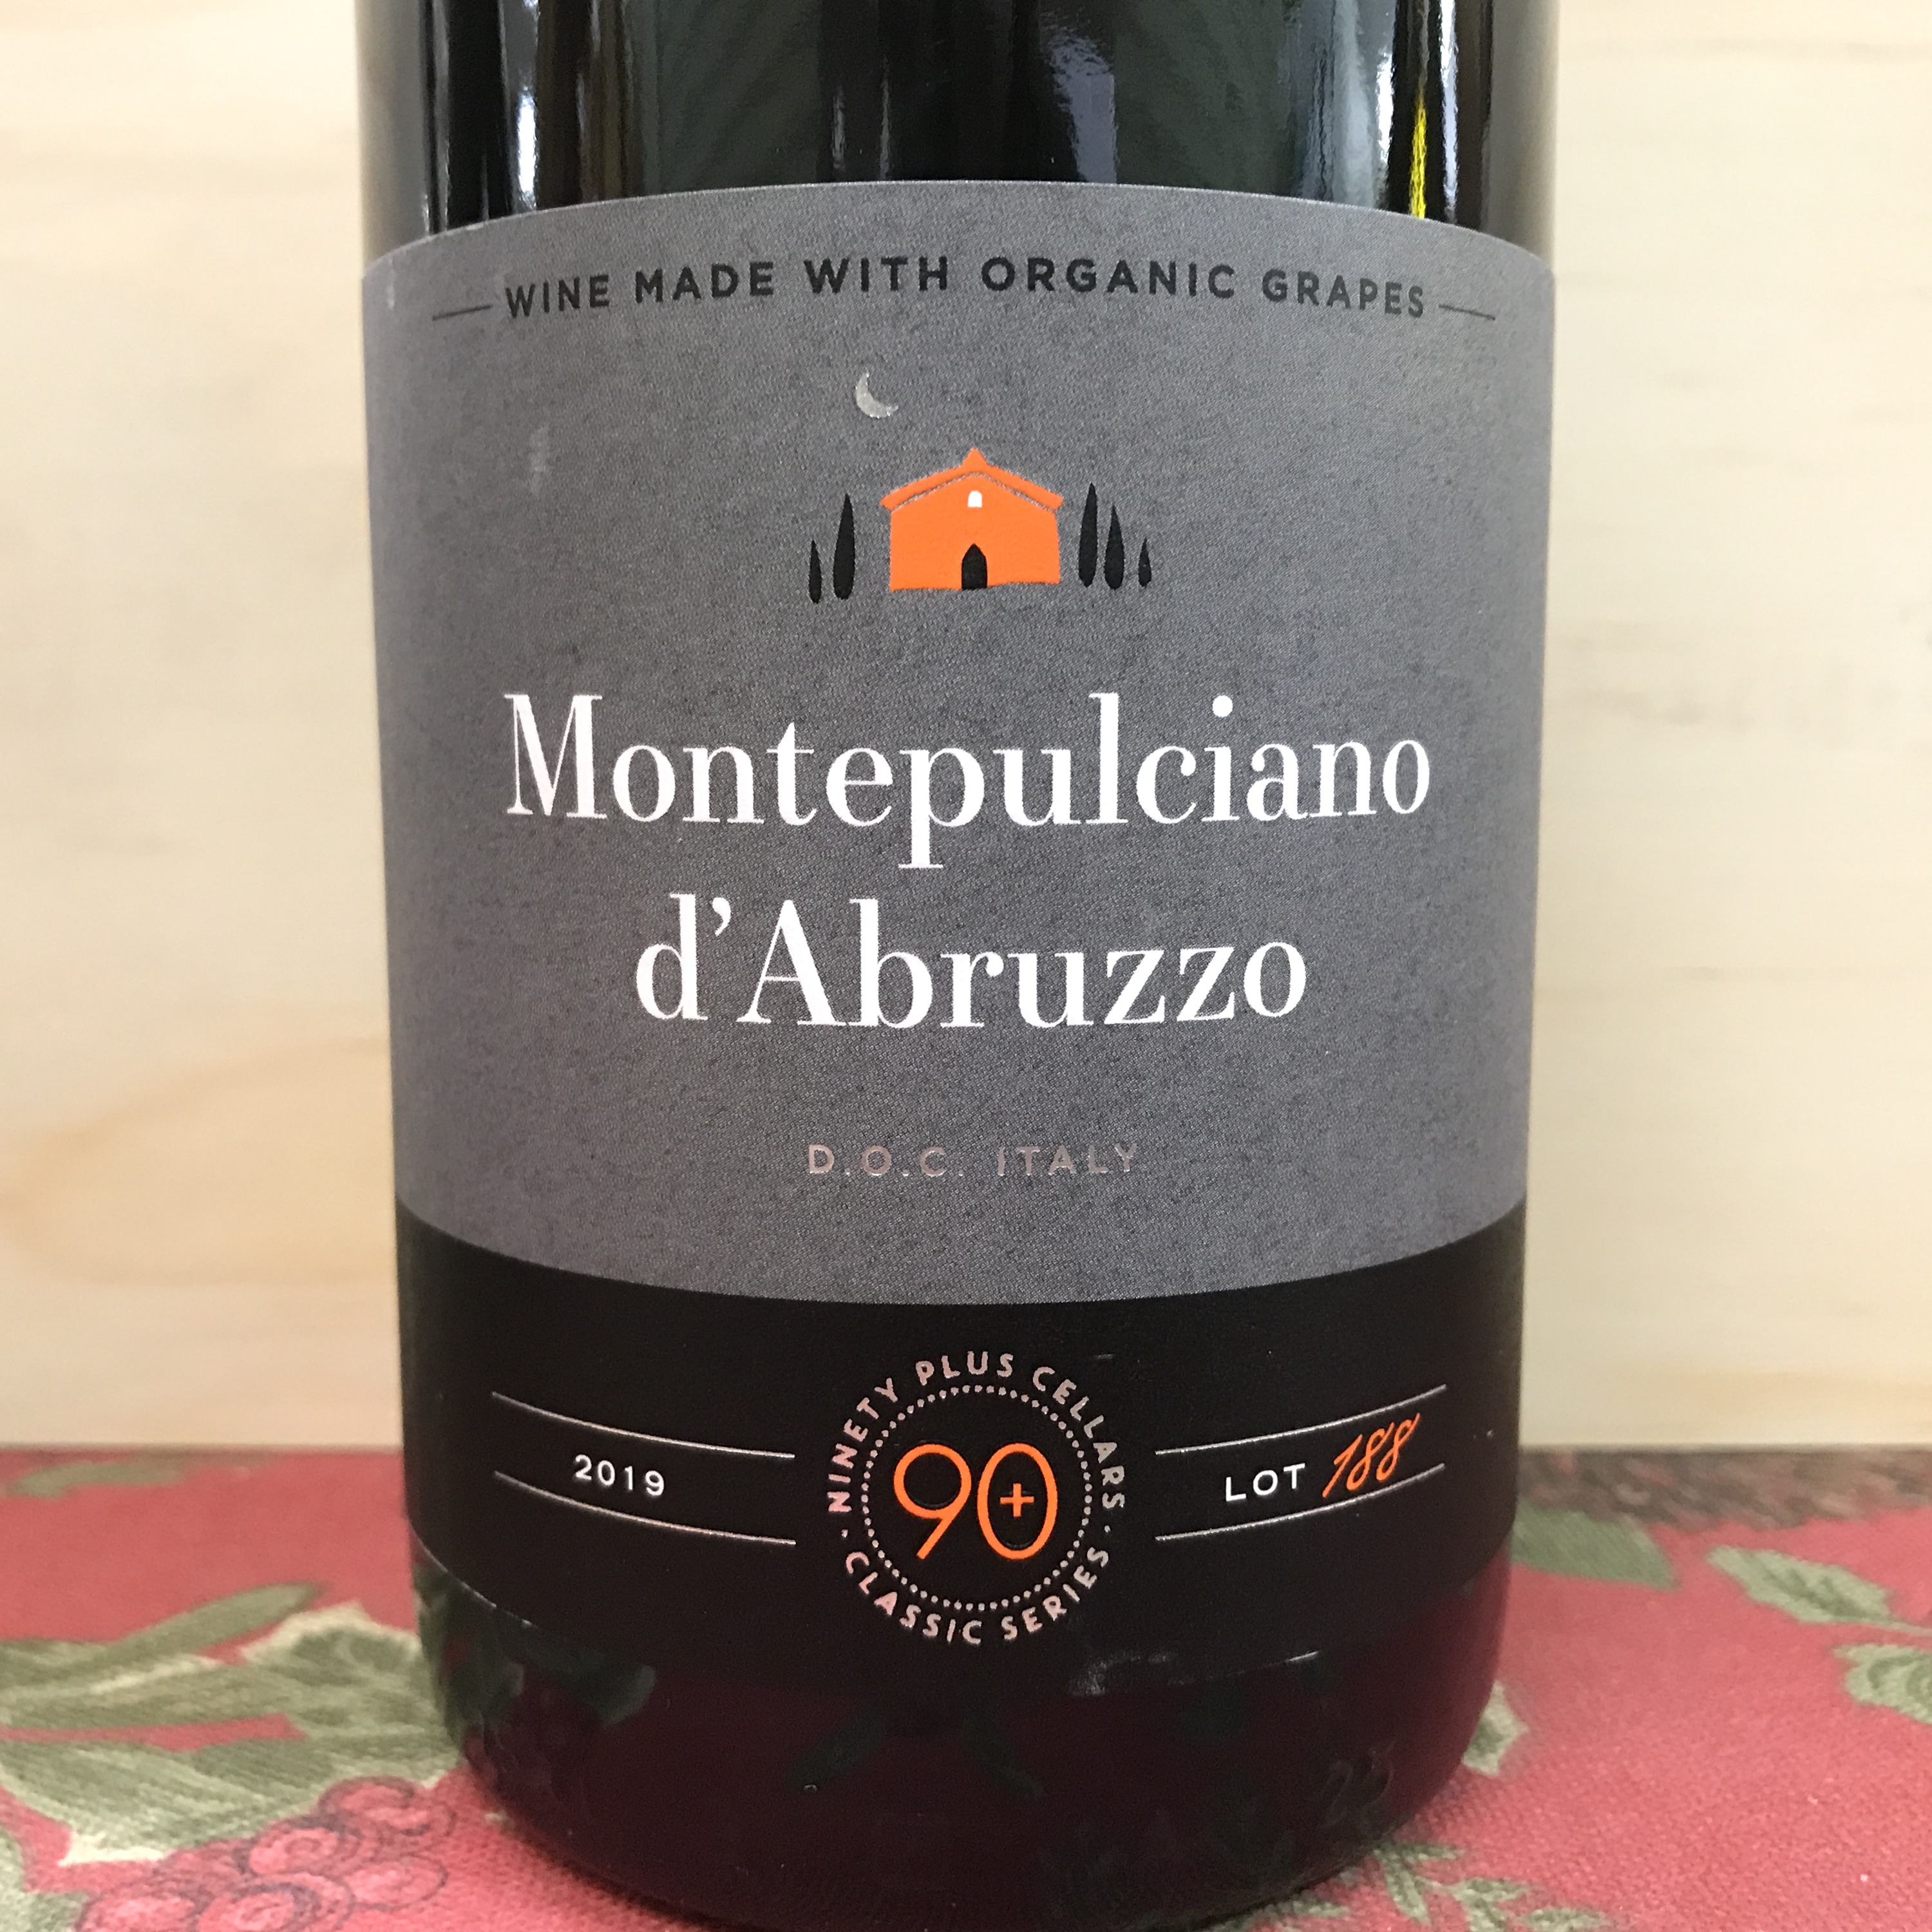 90+ Cellars Montepulciano d'Abruzzo Lot 188 2019 Organic grapes